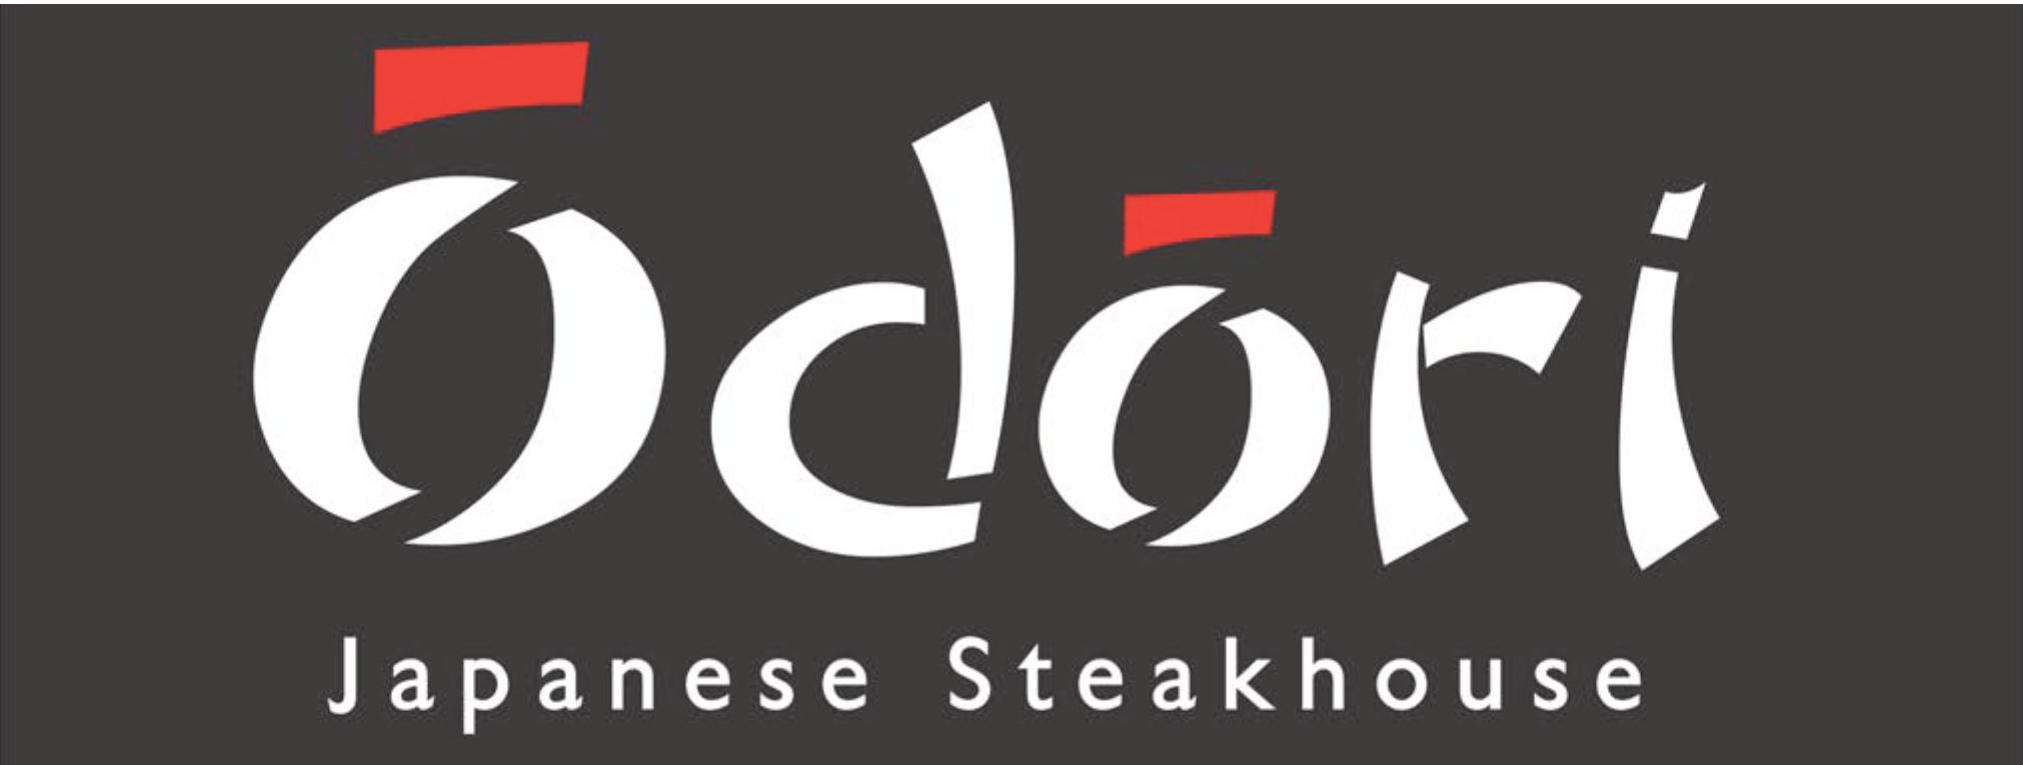 Odori Japanese Steakhouse